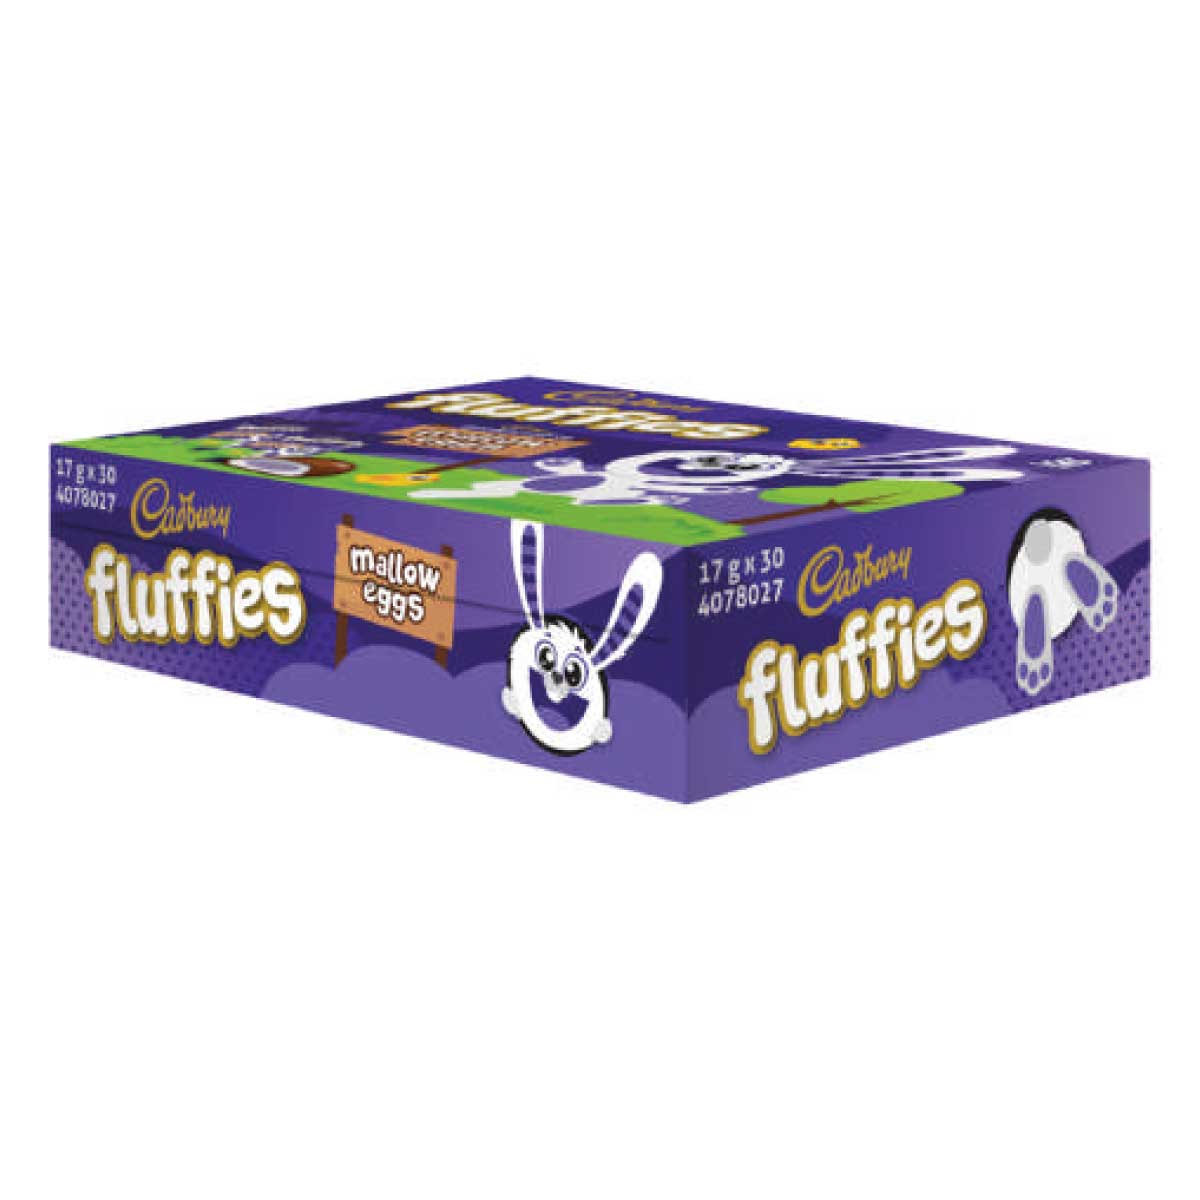 Cadbury Fluffies Chocolate Mallow Eggs 30 Pack